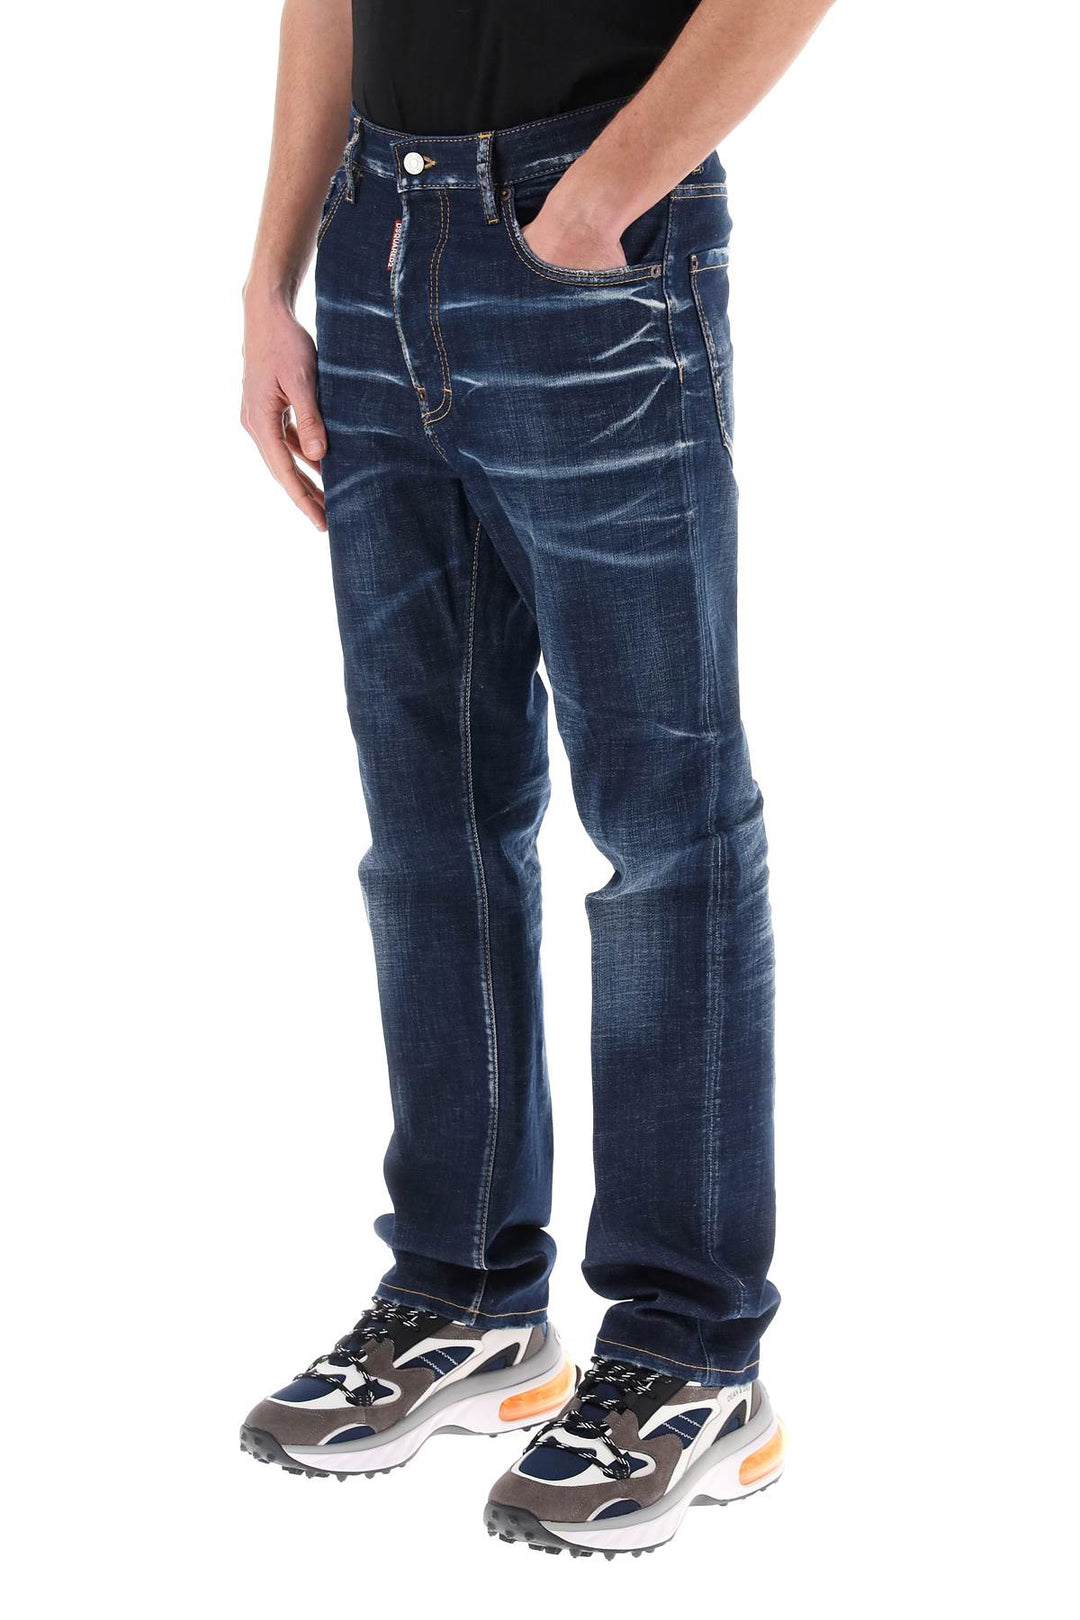 Jeans 642 In Dark Clean Wash - Dsquared2 - Uomo